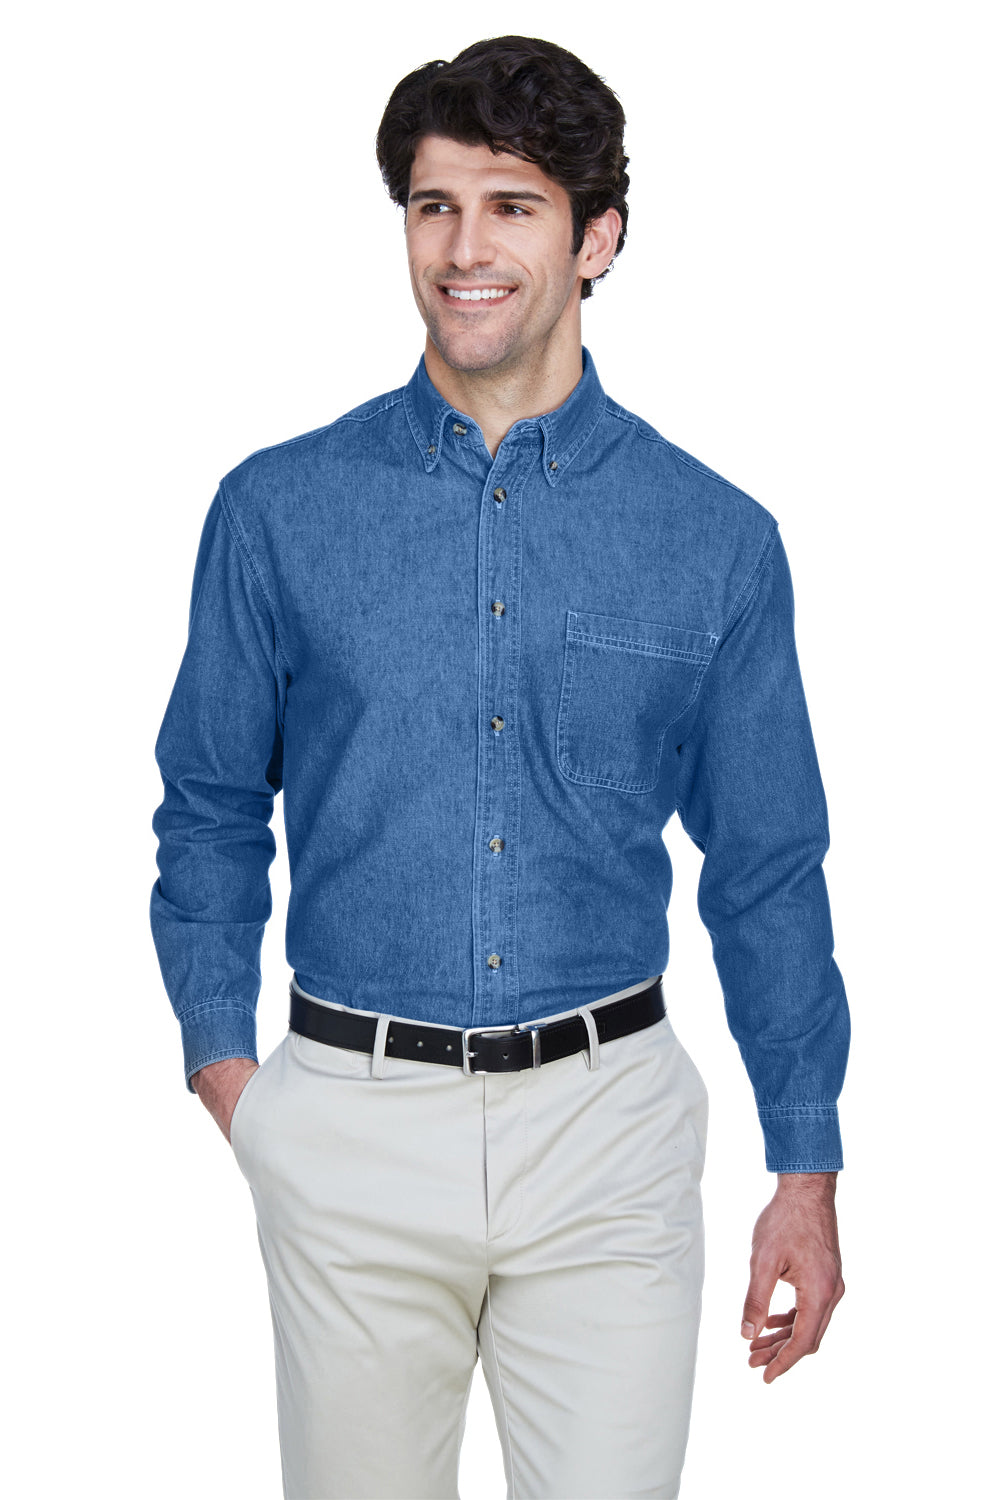 UltraClub 8960 Mens Cypress Denim Long Sleeve Button Down Shirt w/ Pocket Indigo Blue Front